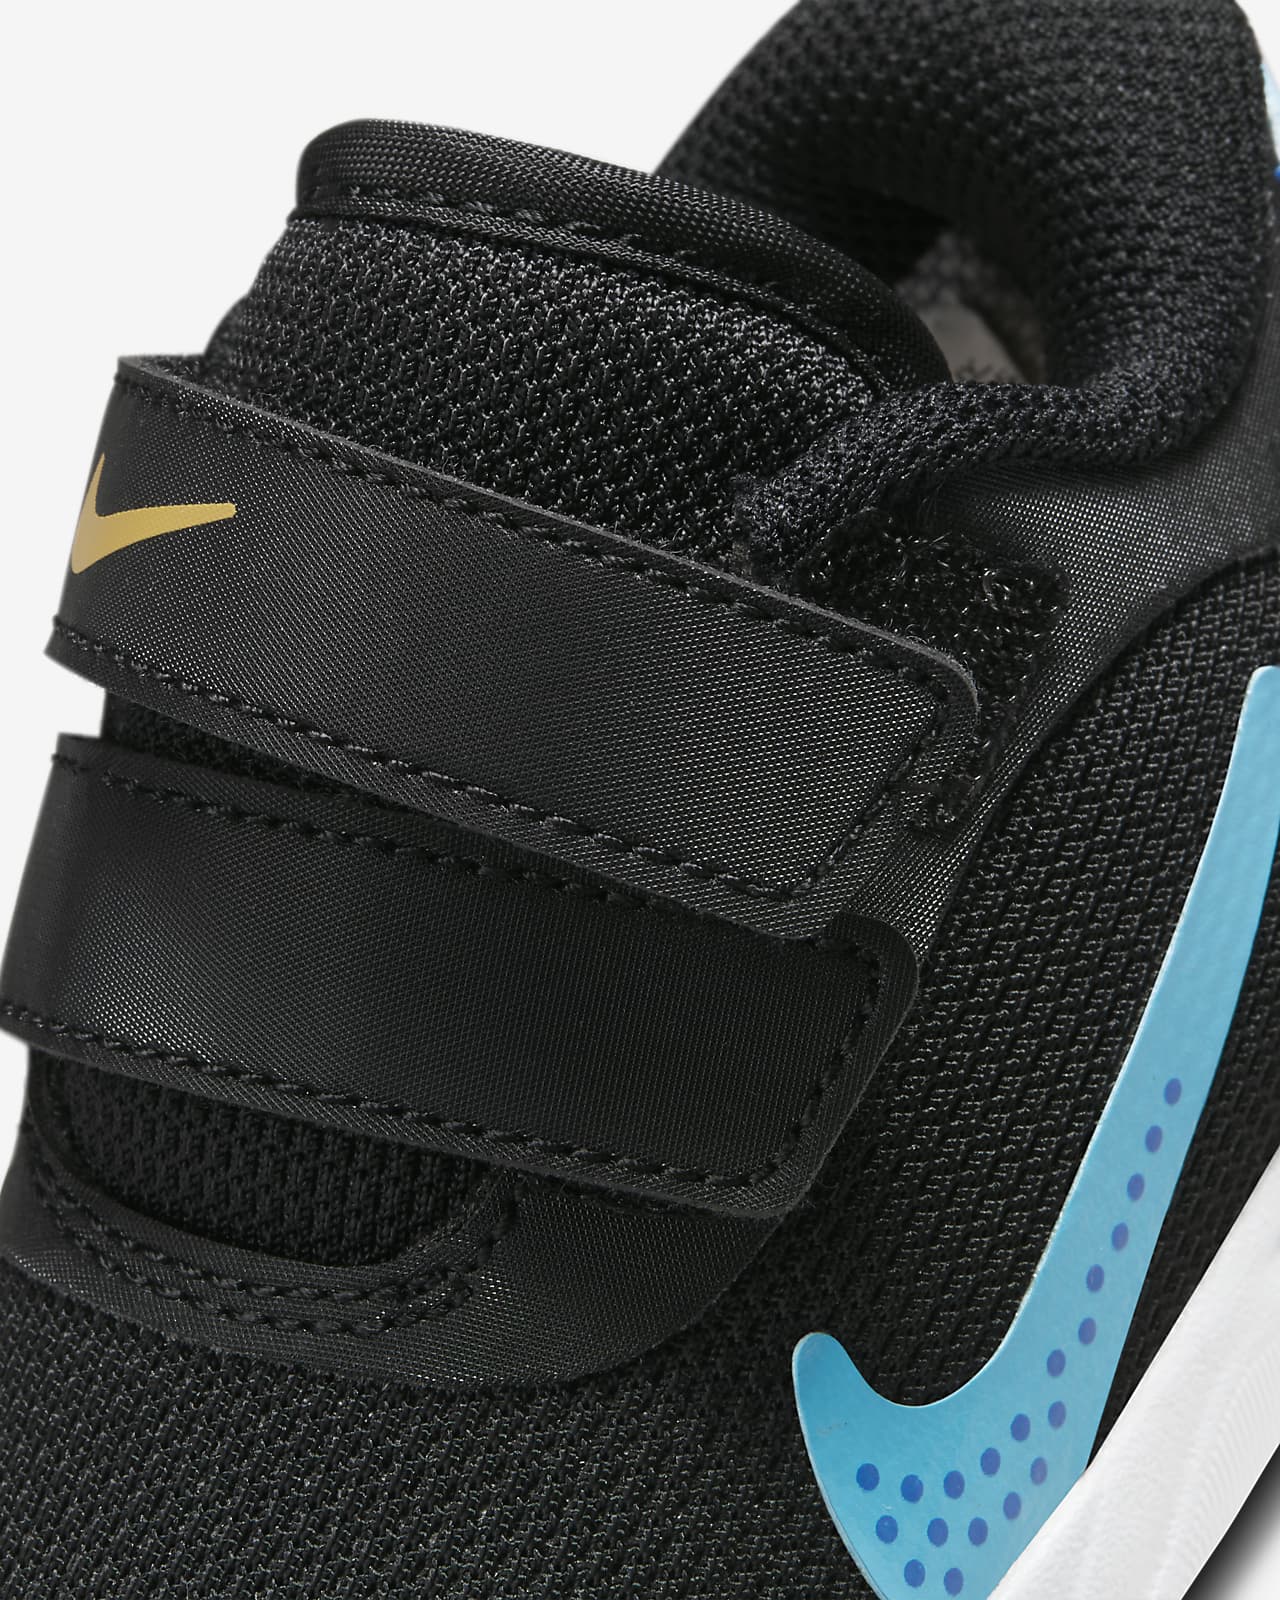 Nike Omni Shoes. Multi-Court Baby/Toddler ID Nike